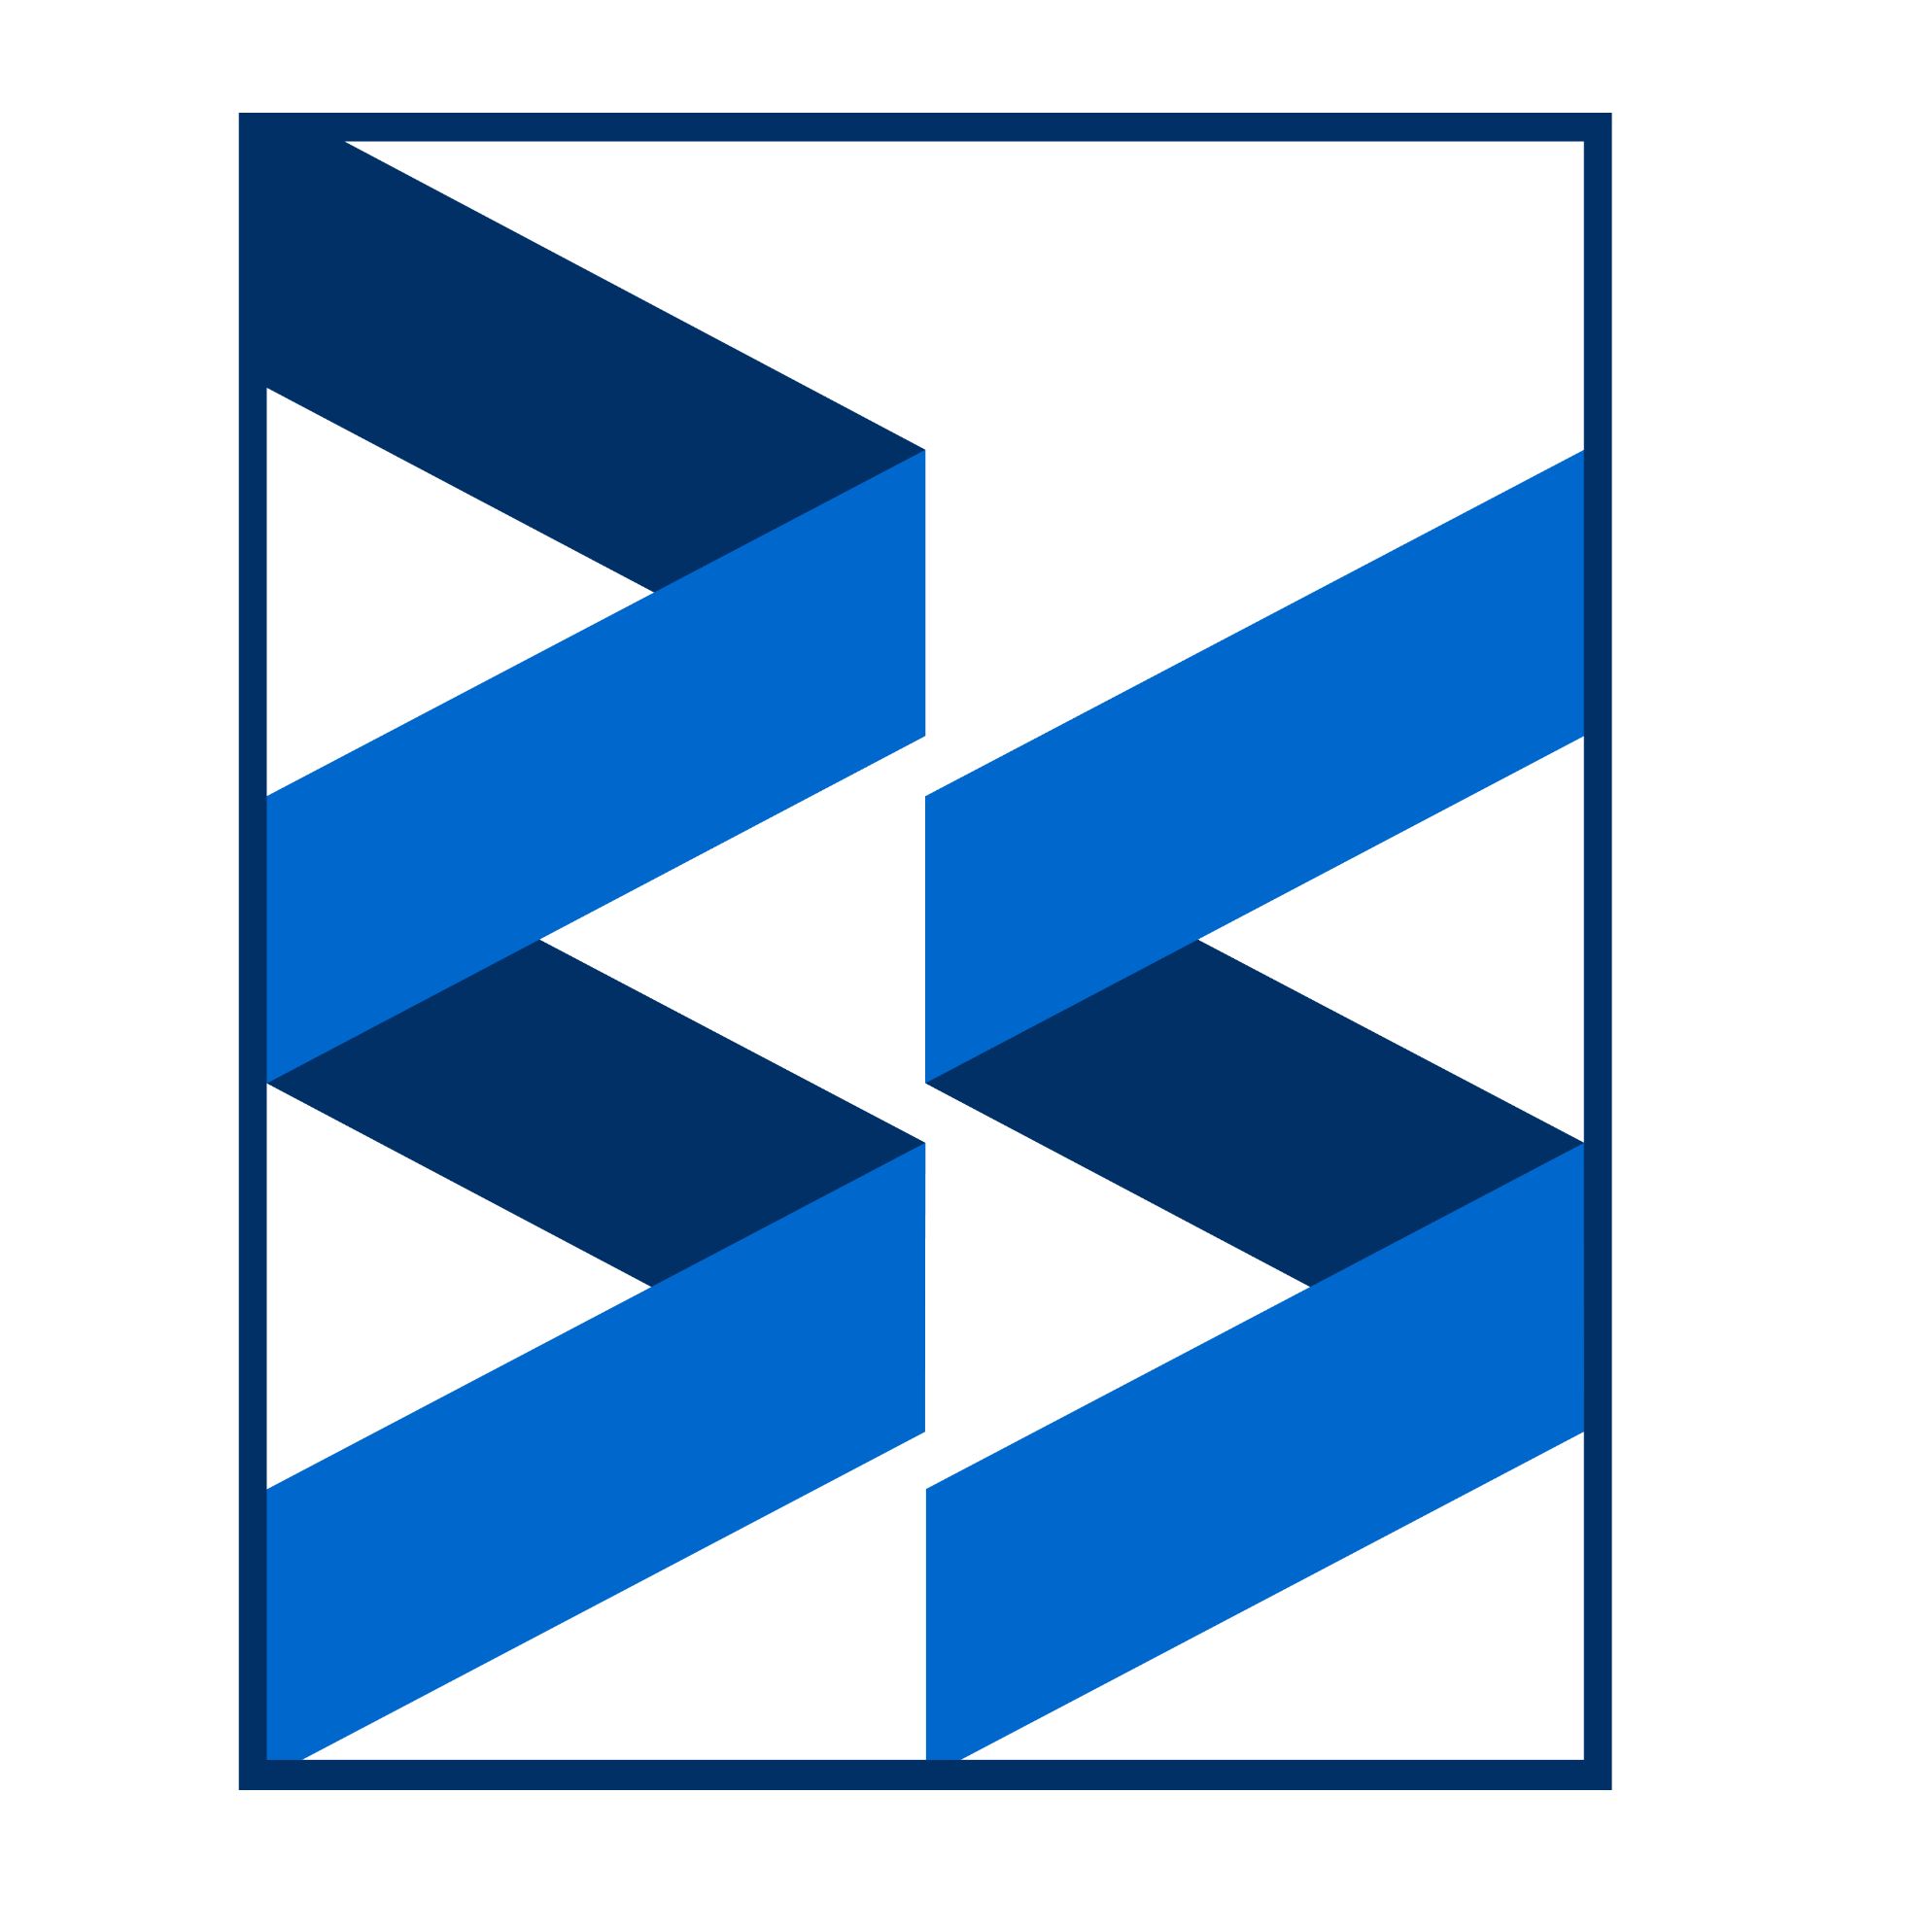 SZTU Business School logo